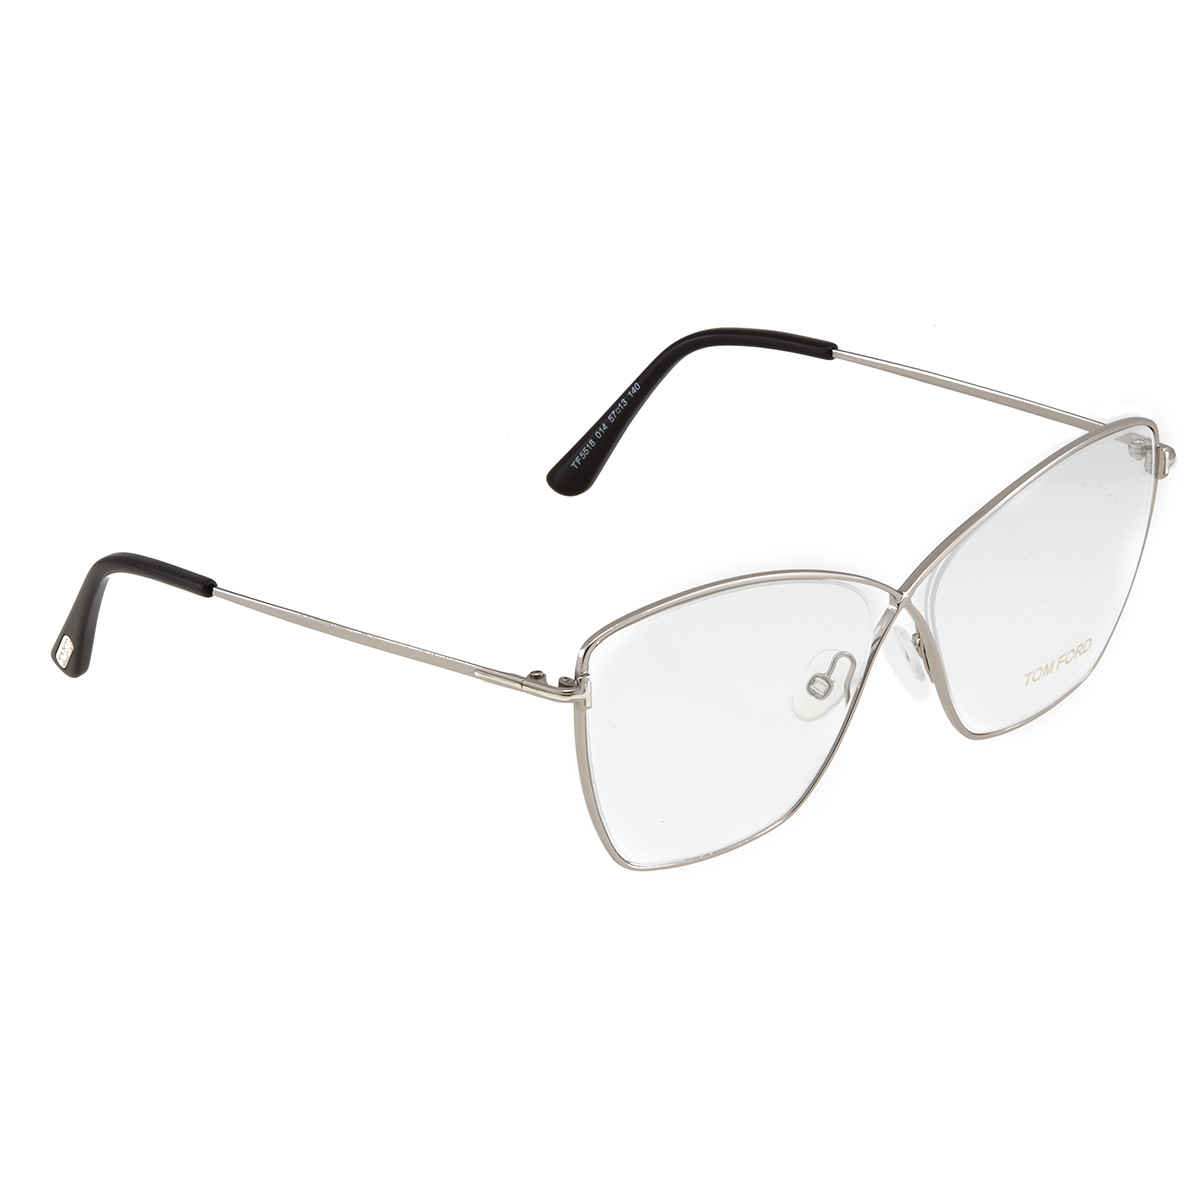 Tom Ford Ladies Eyeglasses FT5518 14 57 